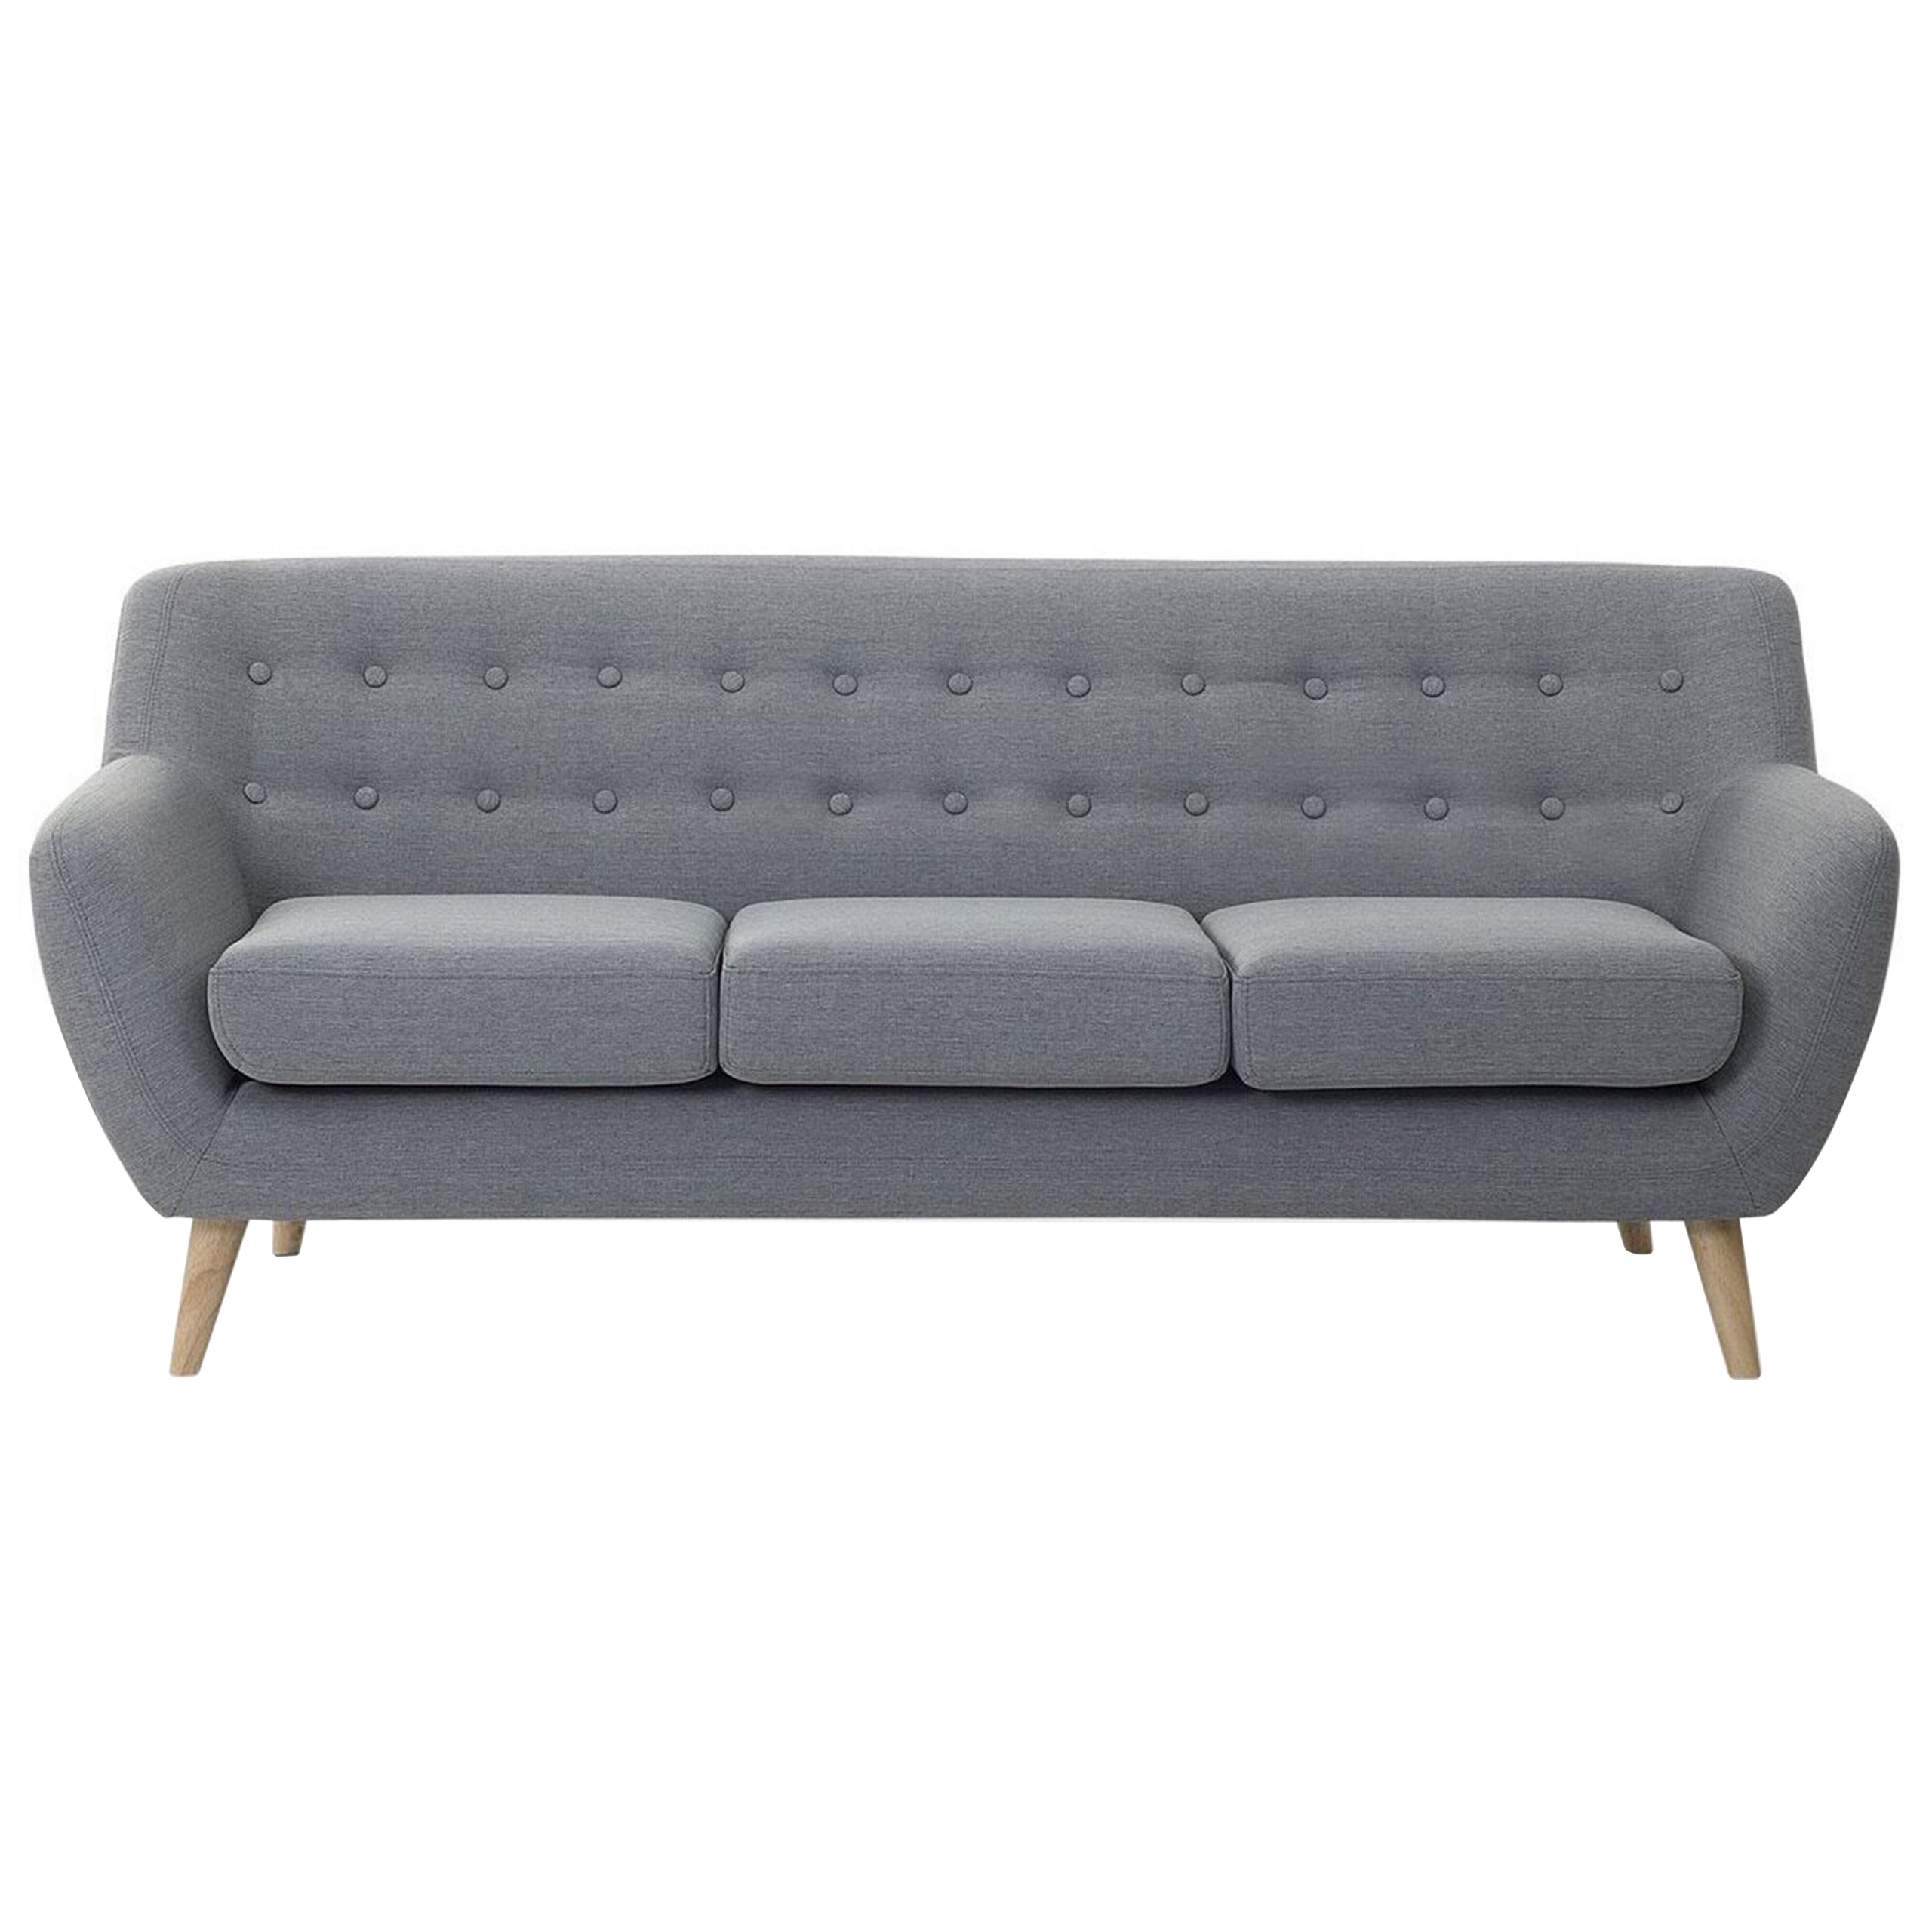 Beliani 3 Seater Sofa Light Grey Upholstered Tufted Back Thickly Padded Light Wood Legs Scandinavian Minimalist Living Room